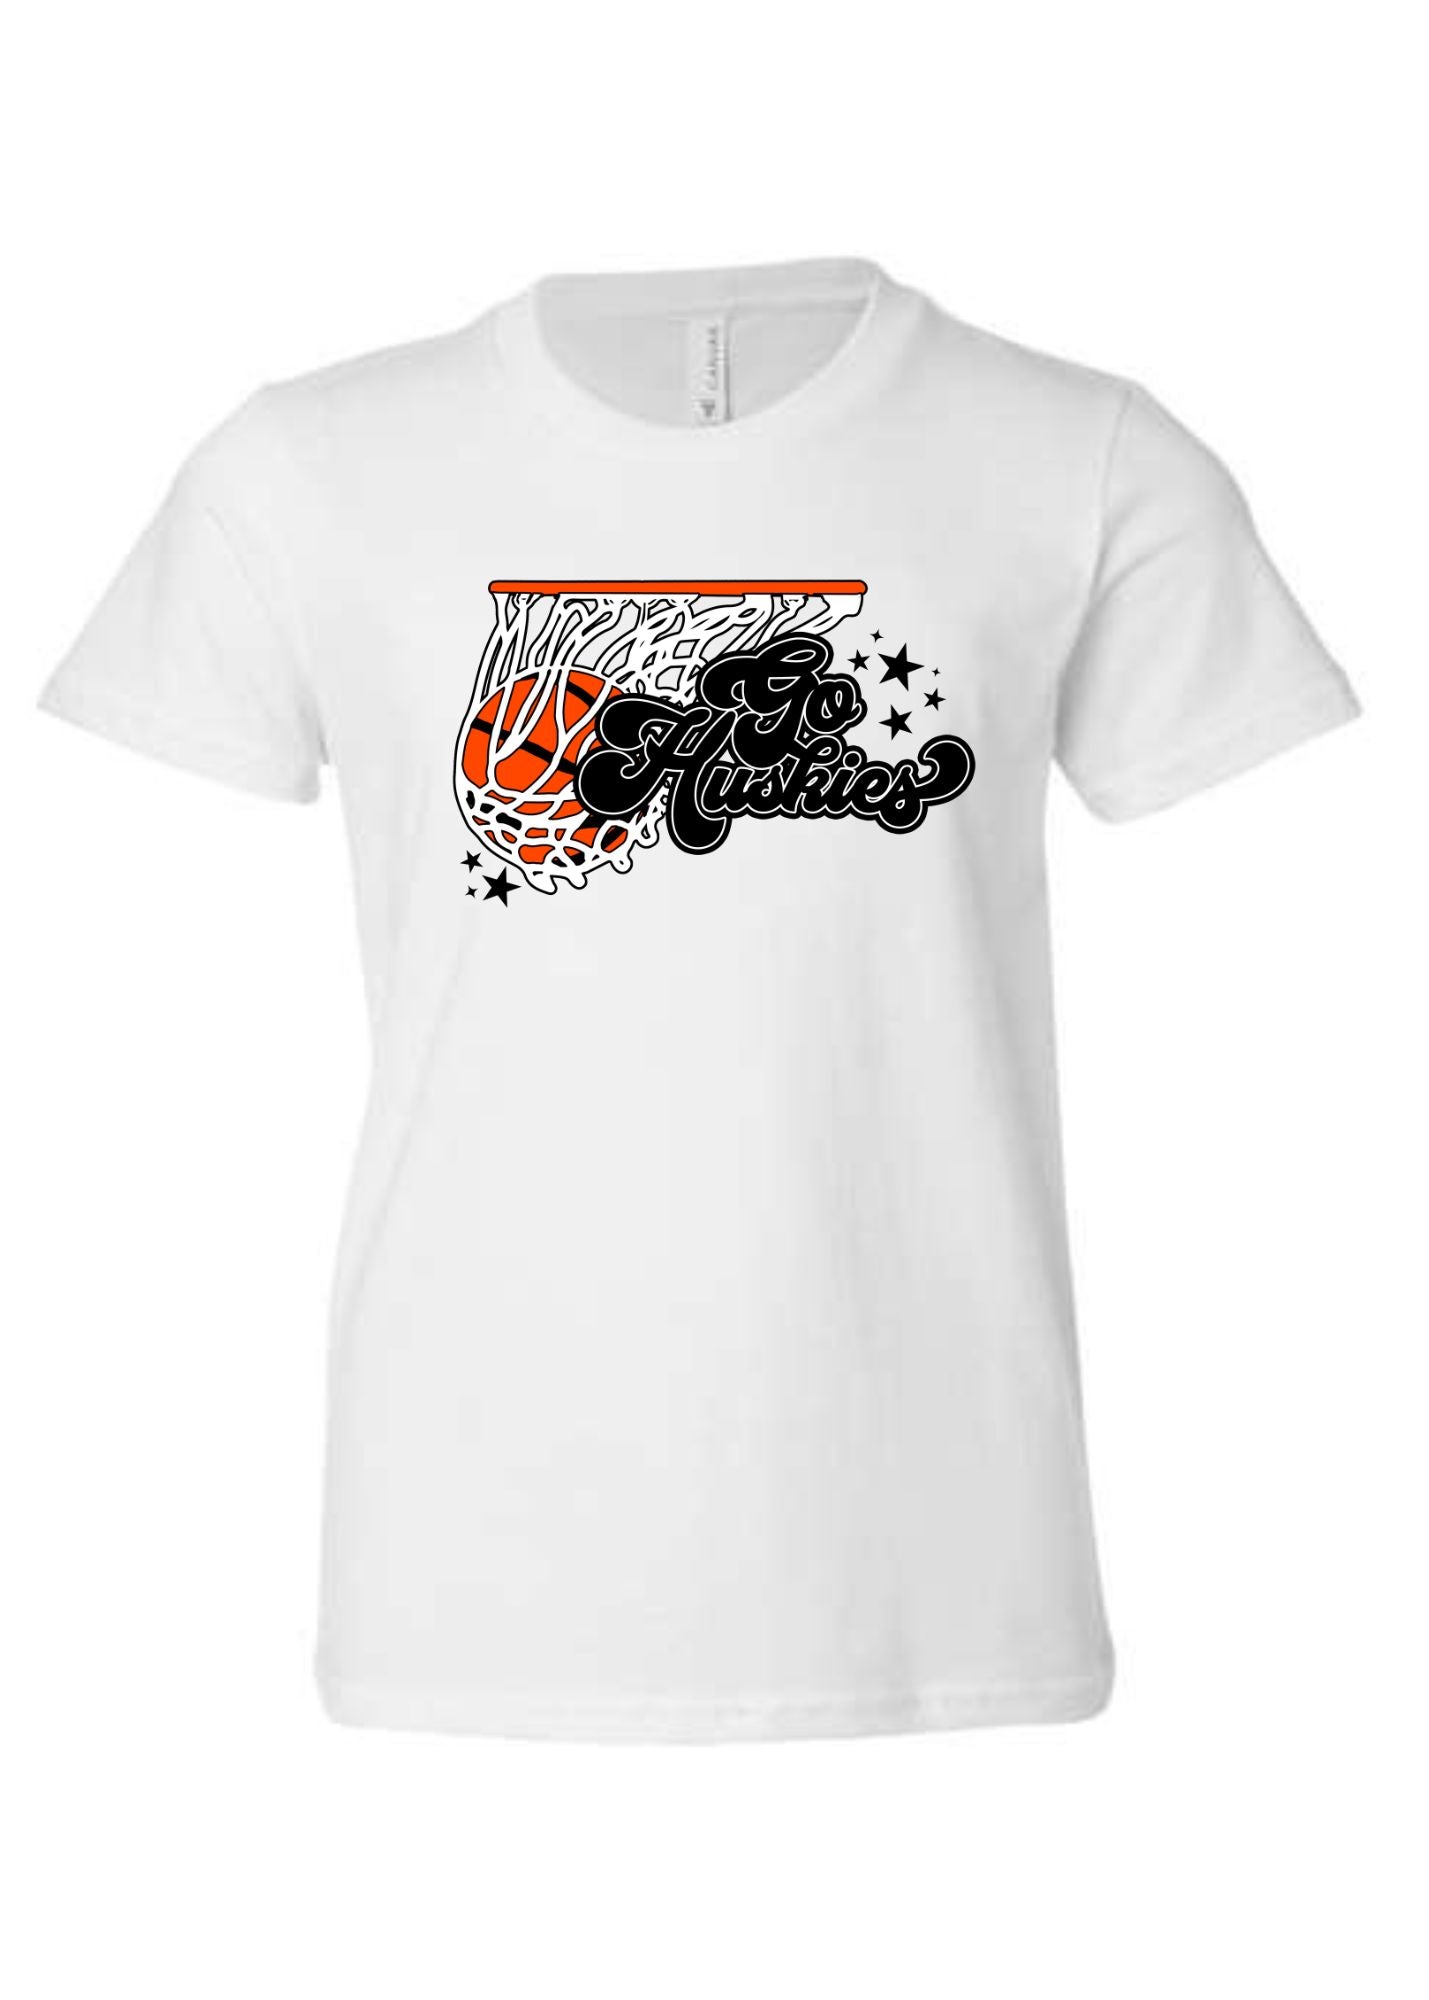 Go Huskies Basketball | Kids Tee-Kids Tees-Sister Shirts-Sister Shirts, Cute & Custom Tees for Mama & Littles in Trussville, Alabama.